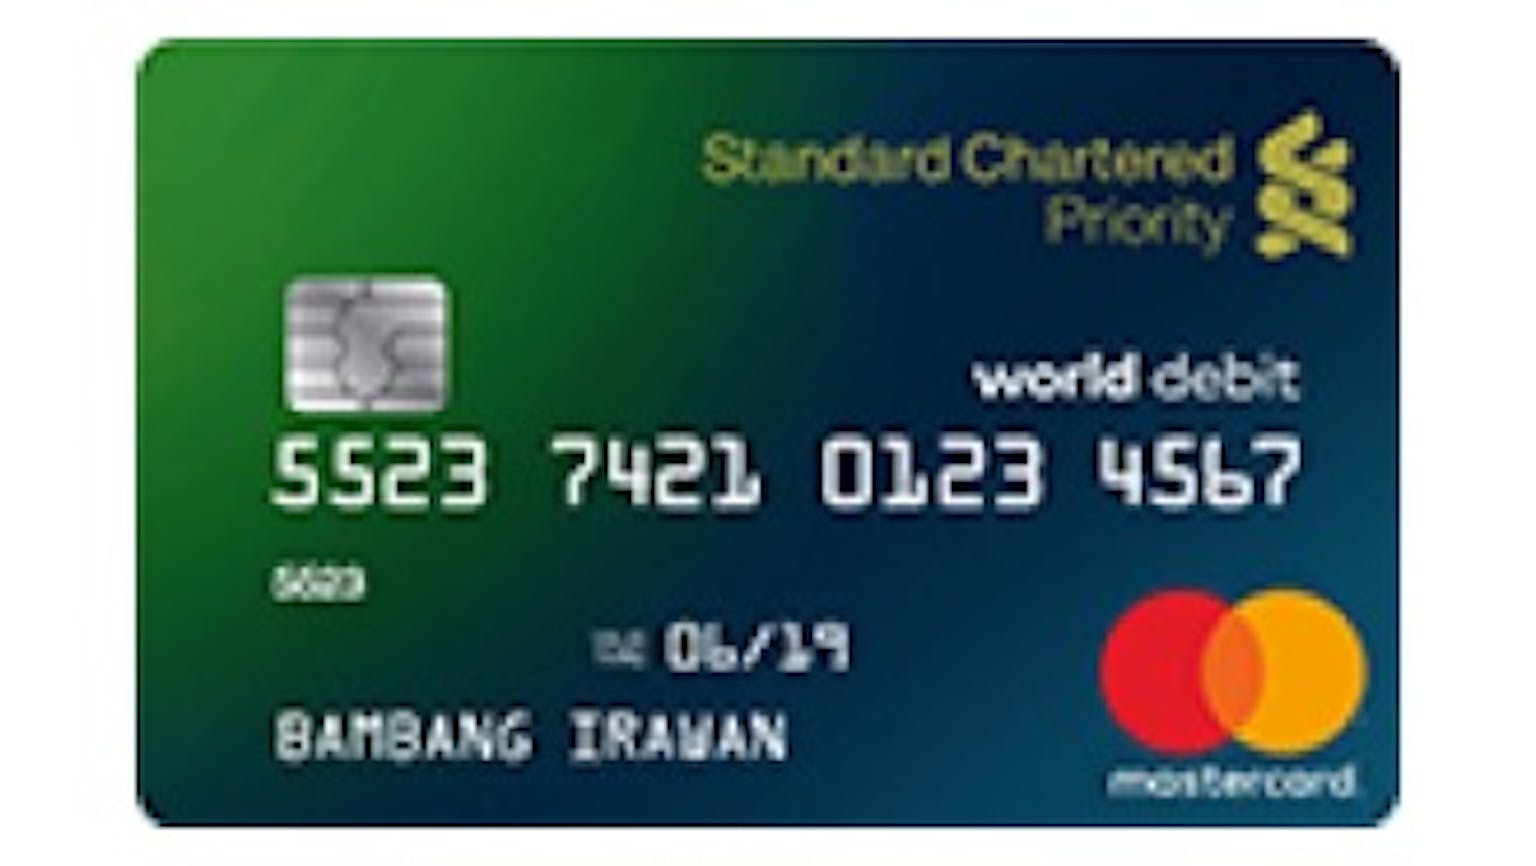 Kartu Debit Priority Standard Chartered